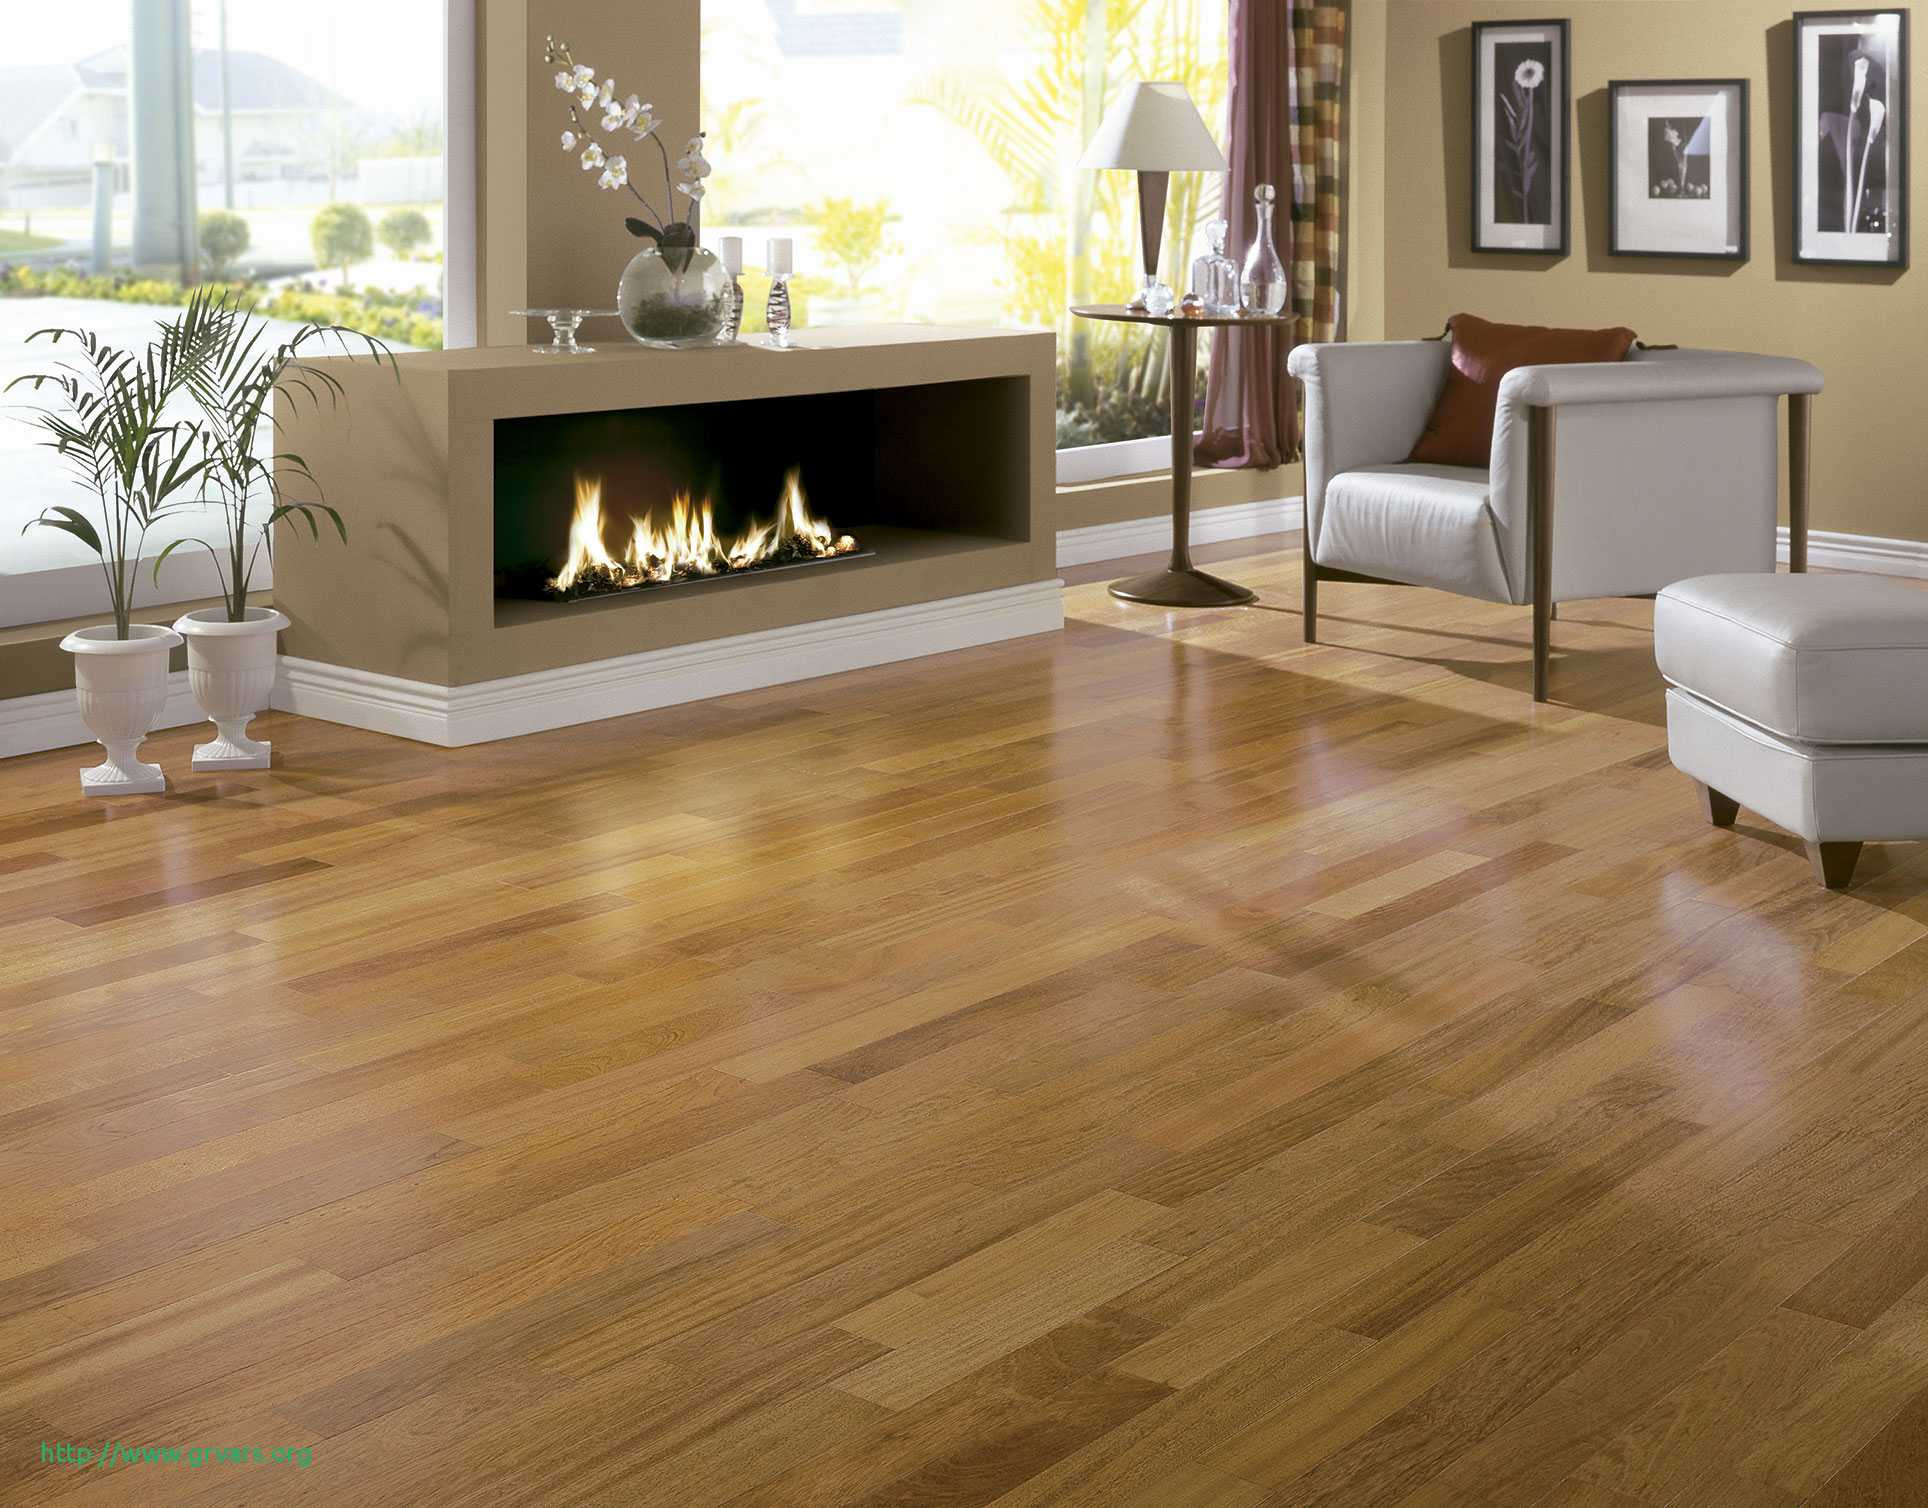 Fireplace Backsplash Ideas Best Of 29 Ideal Hardwood Floor Tile Kitchen